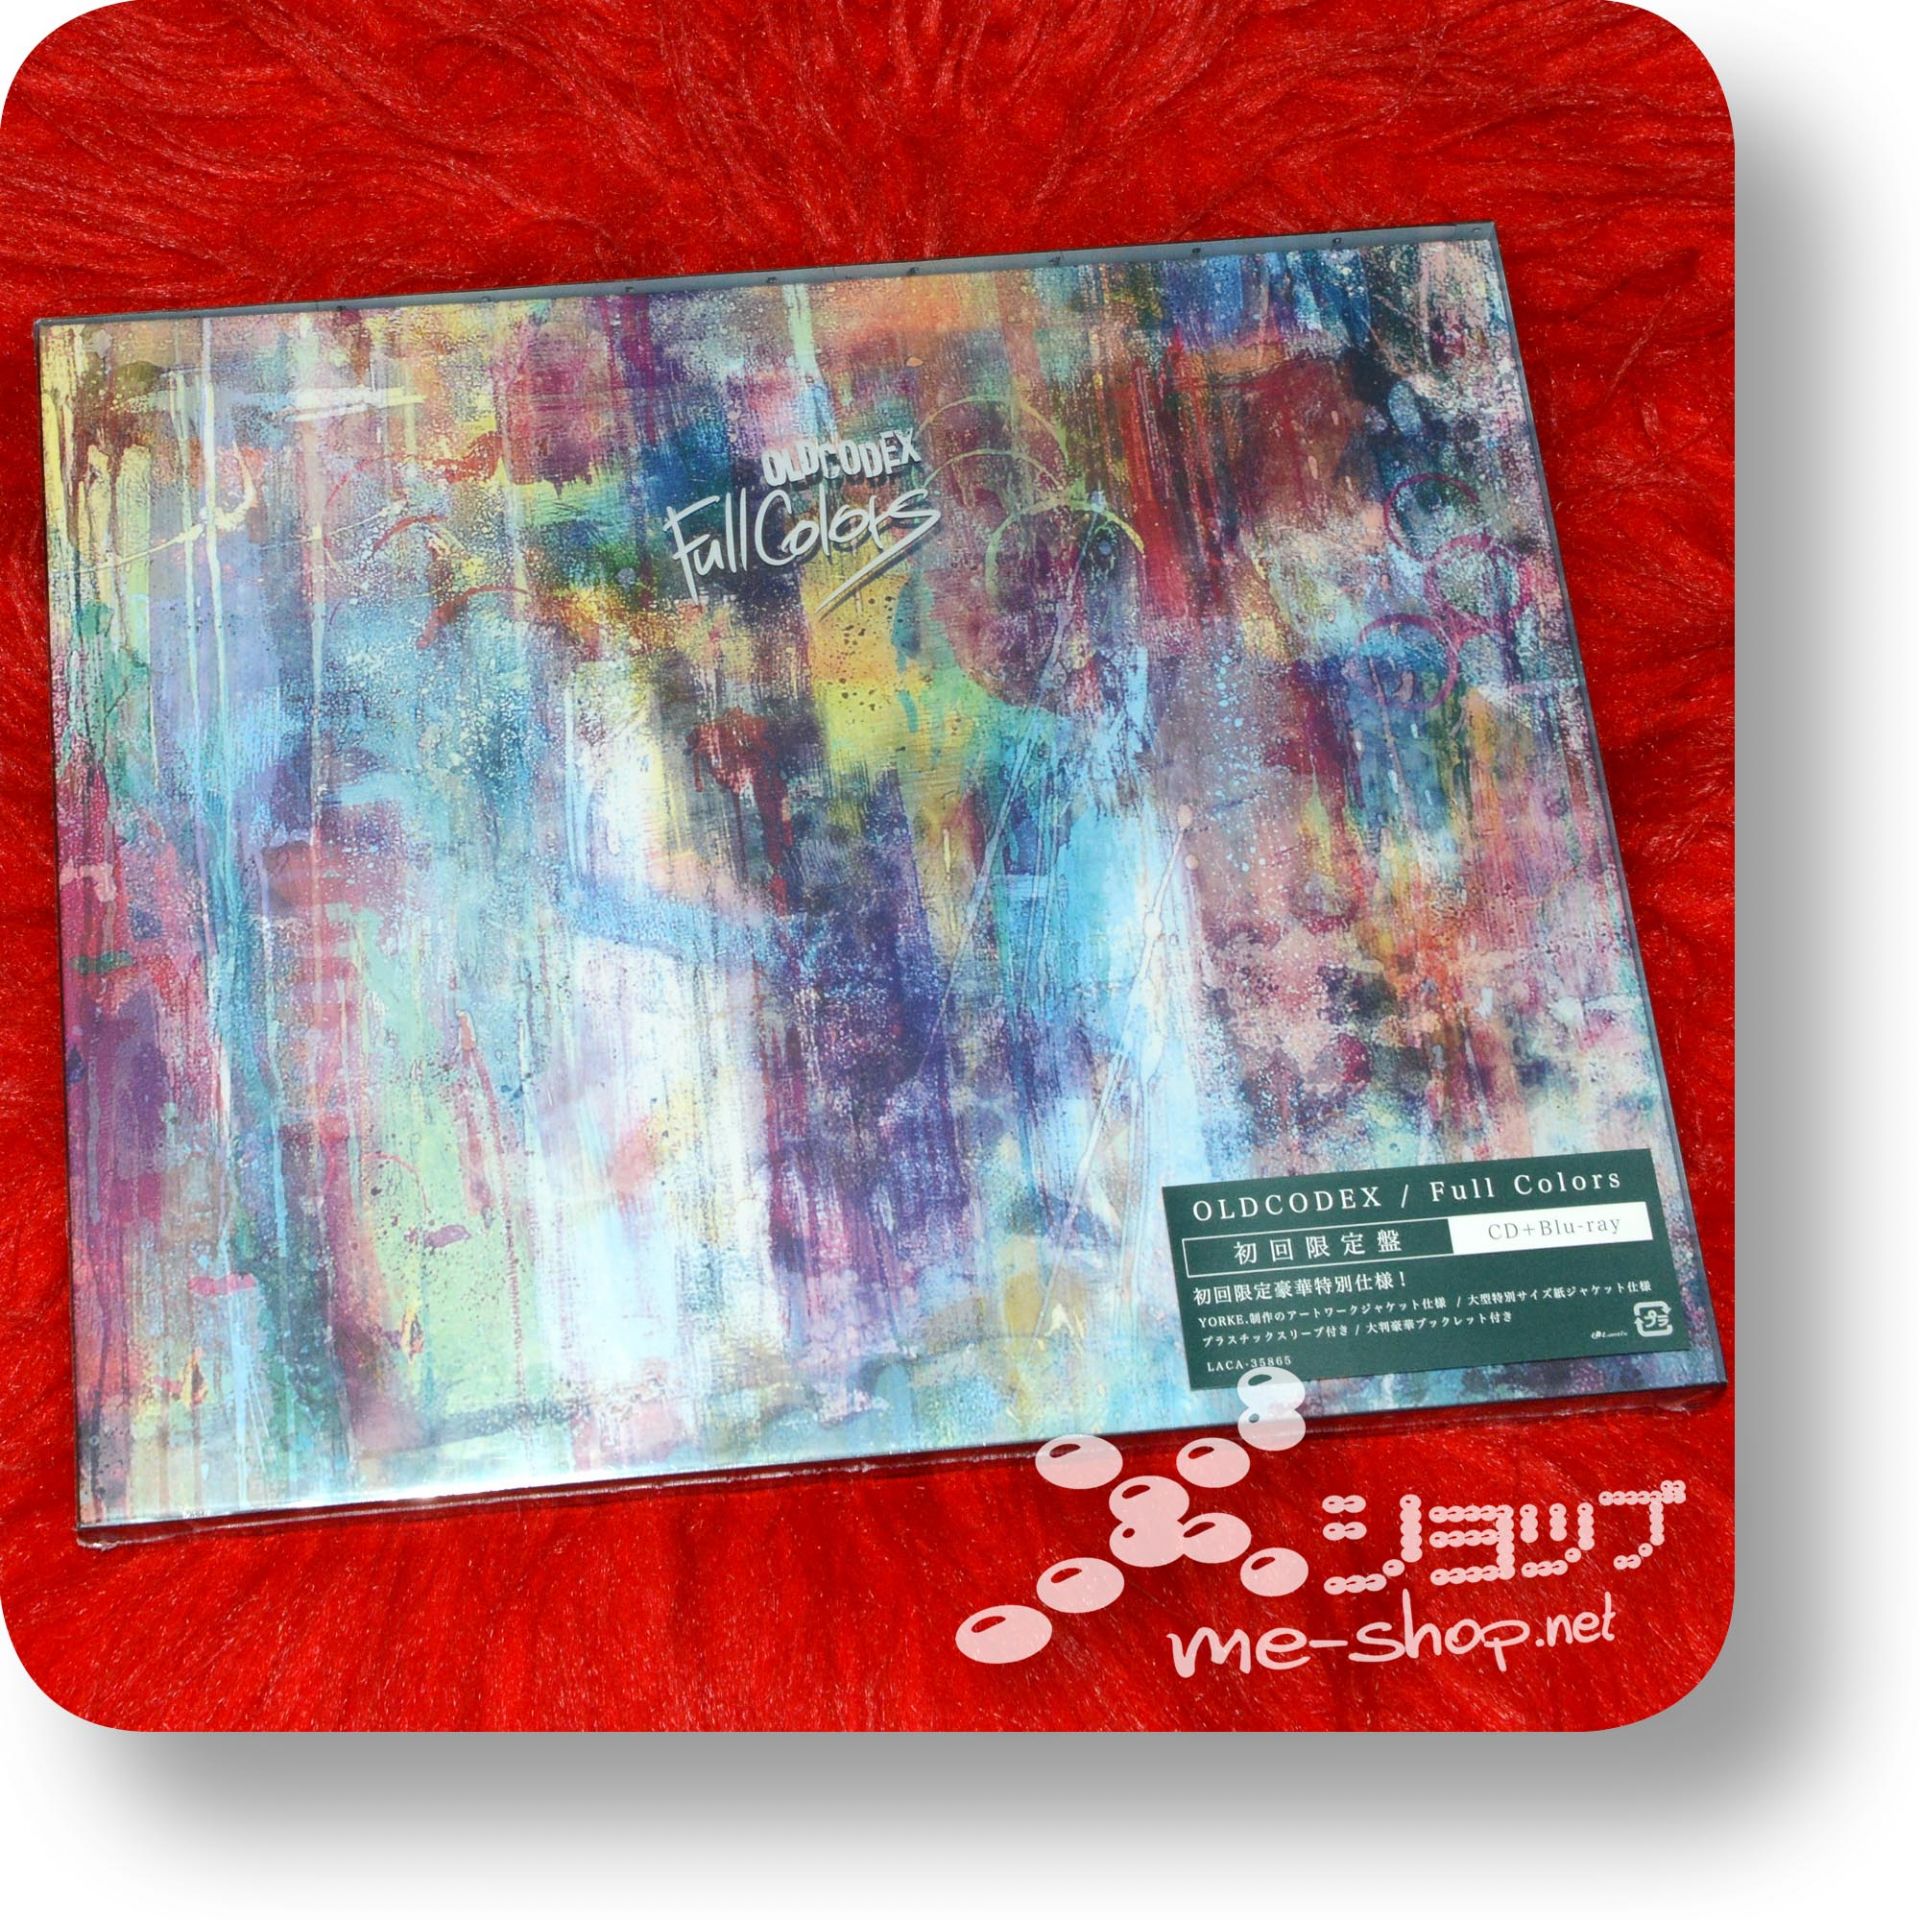 OLDCODEX - Full Colors (lim.CD+Blu-ray+Artbook)